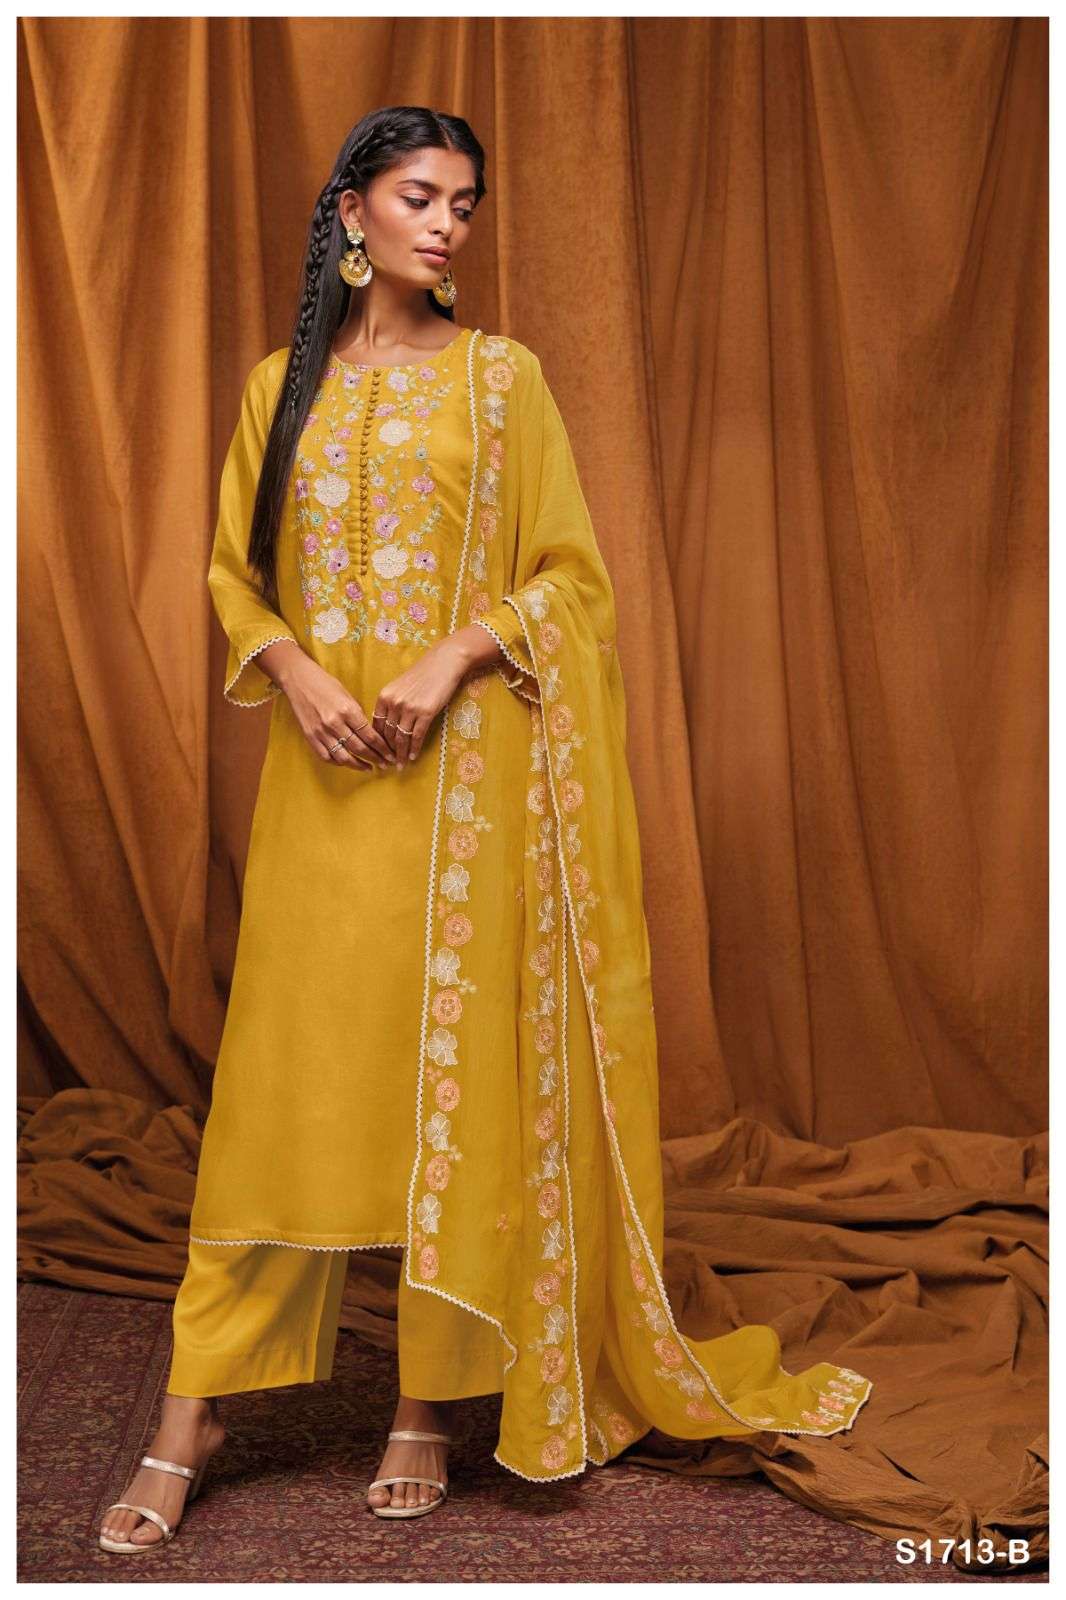 ganga yahvi 1713 series function special designer salwar kameez catalogue online dealer surat